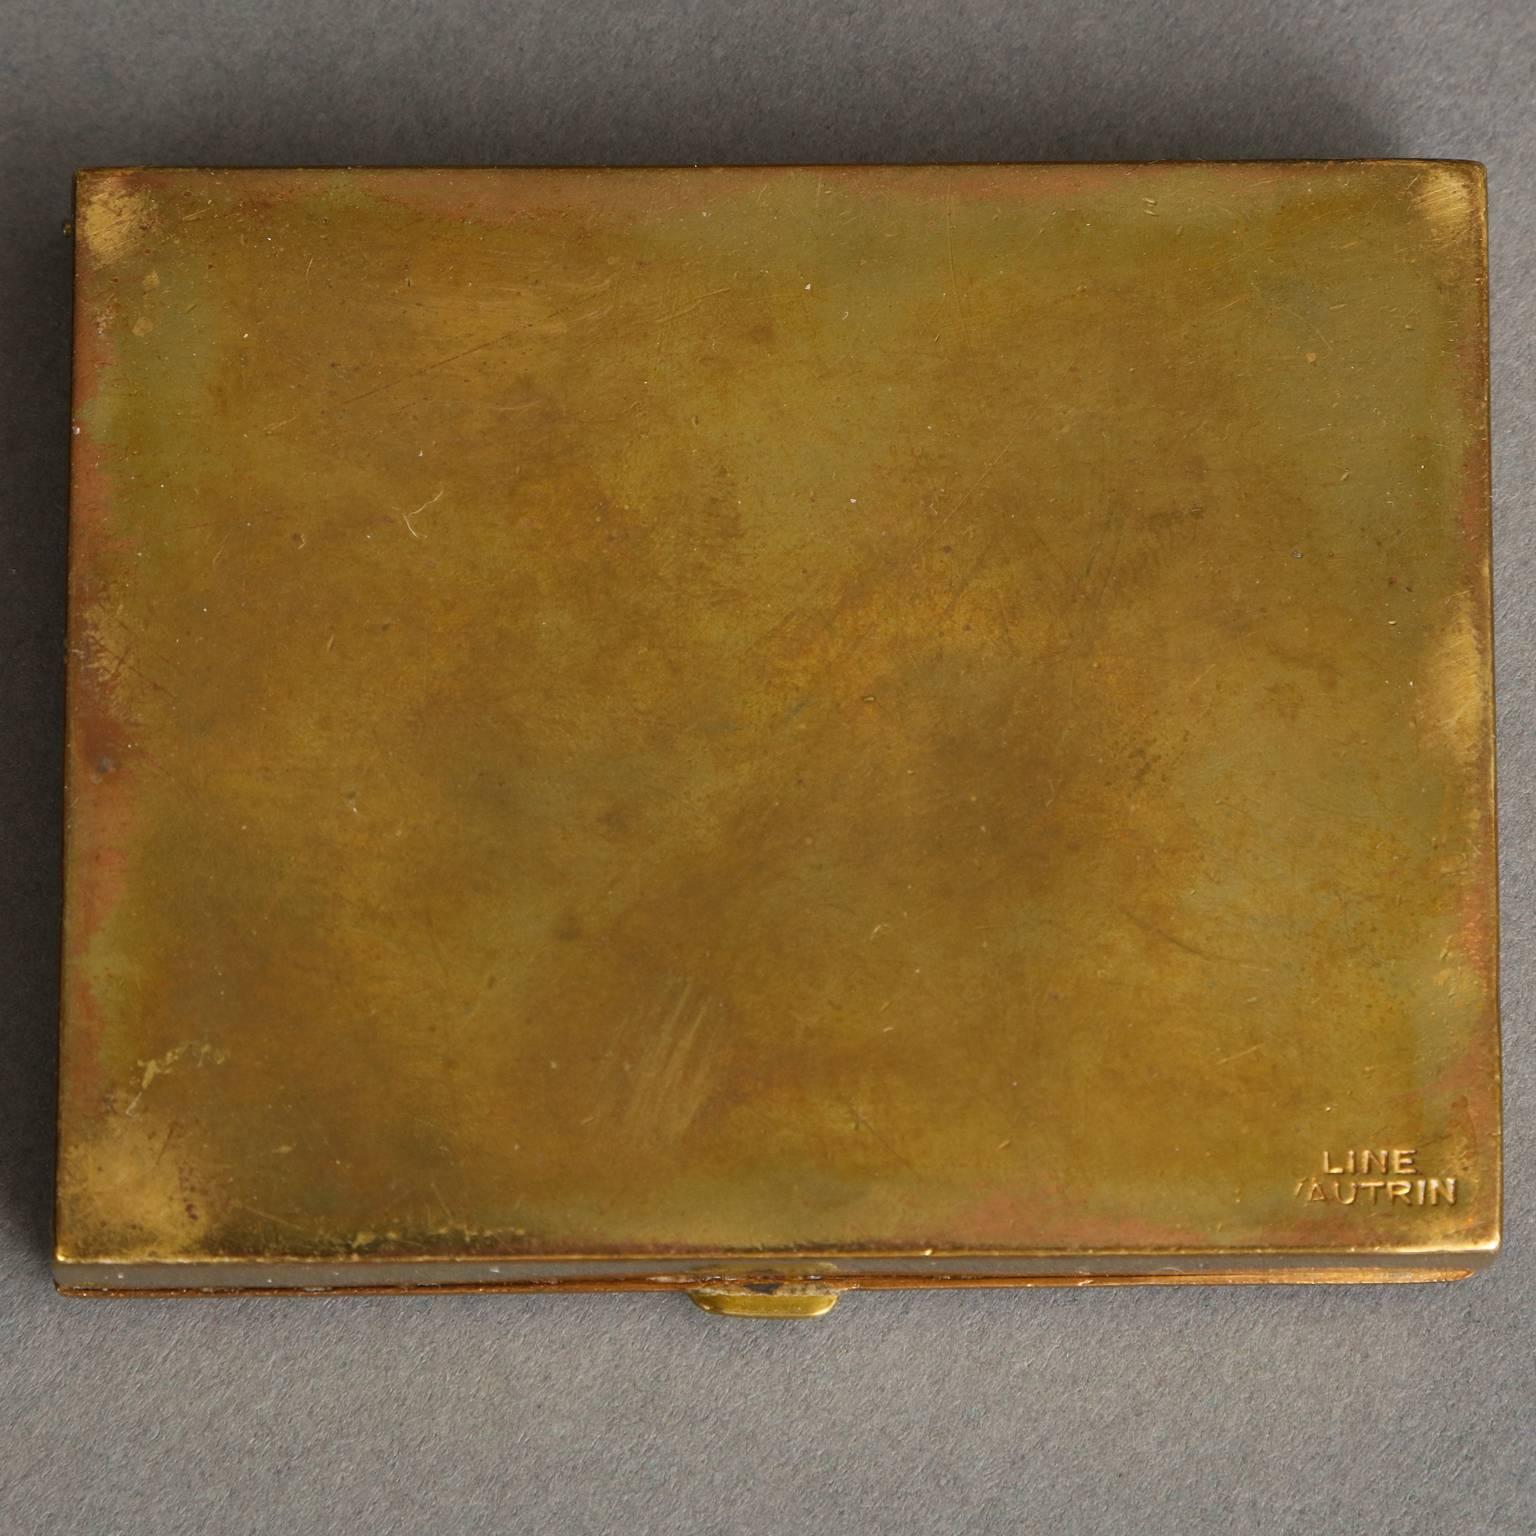 Line Vautrin (1914-1997).
"Jalousie" compact in gilt bronze.
Signed: Line Vautrin on the back.
 